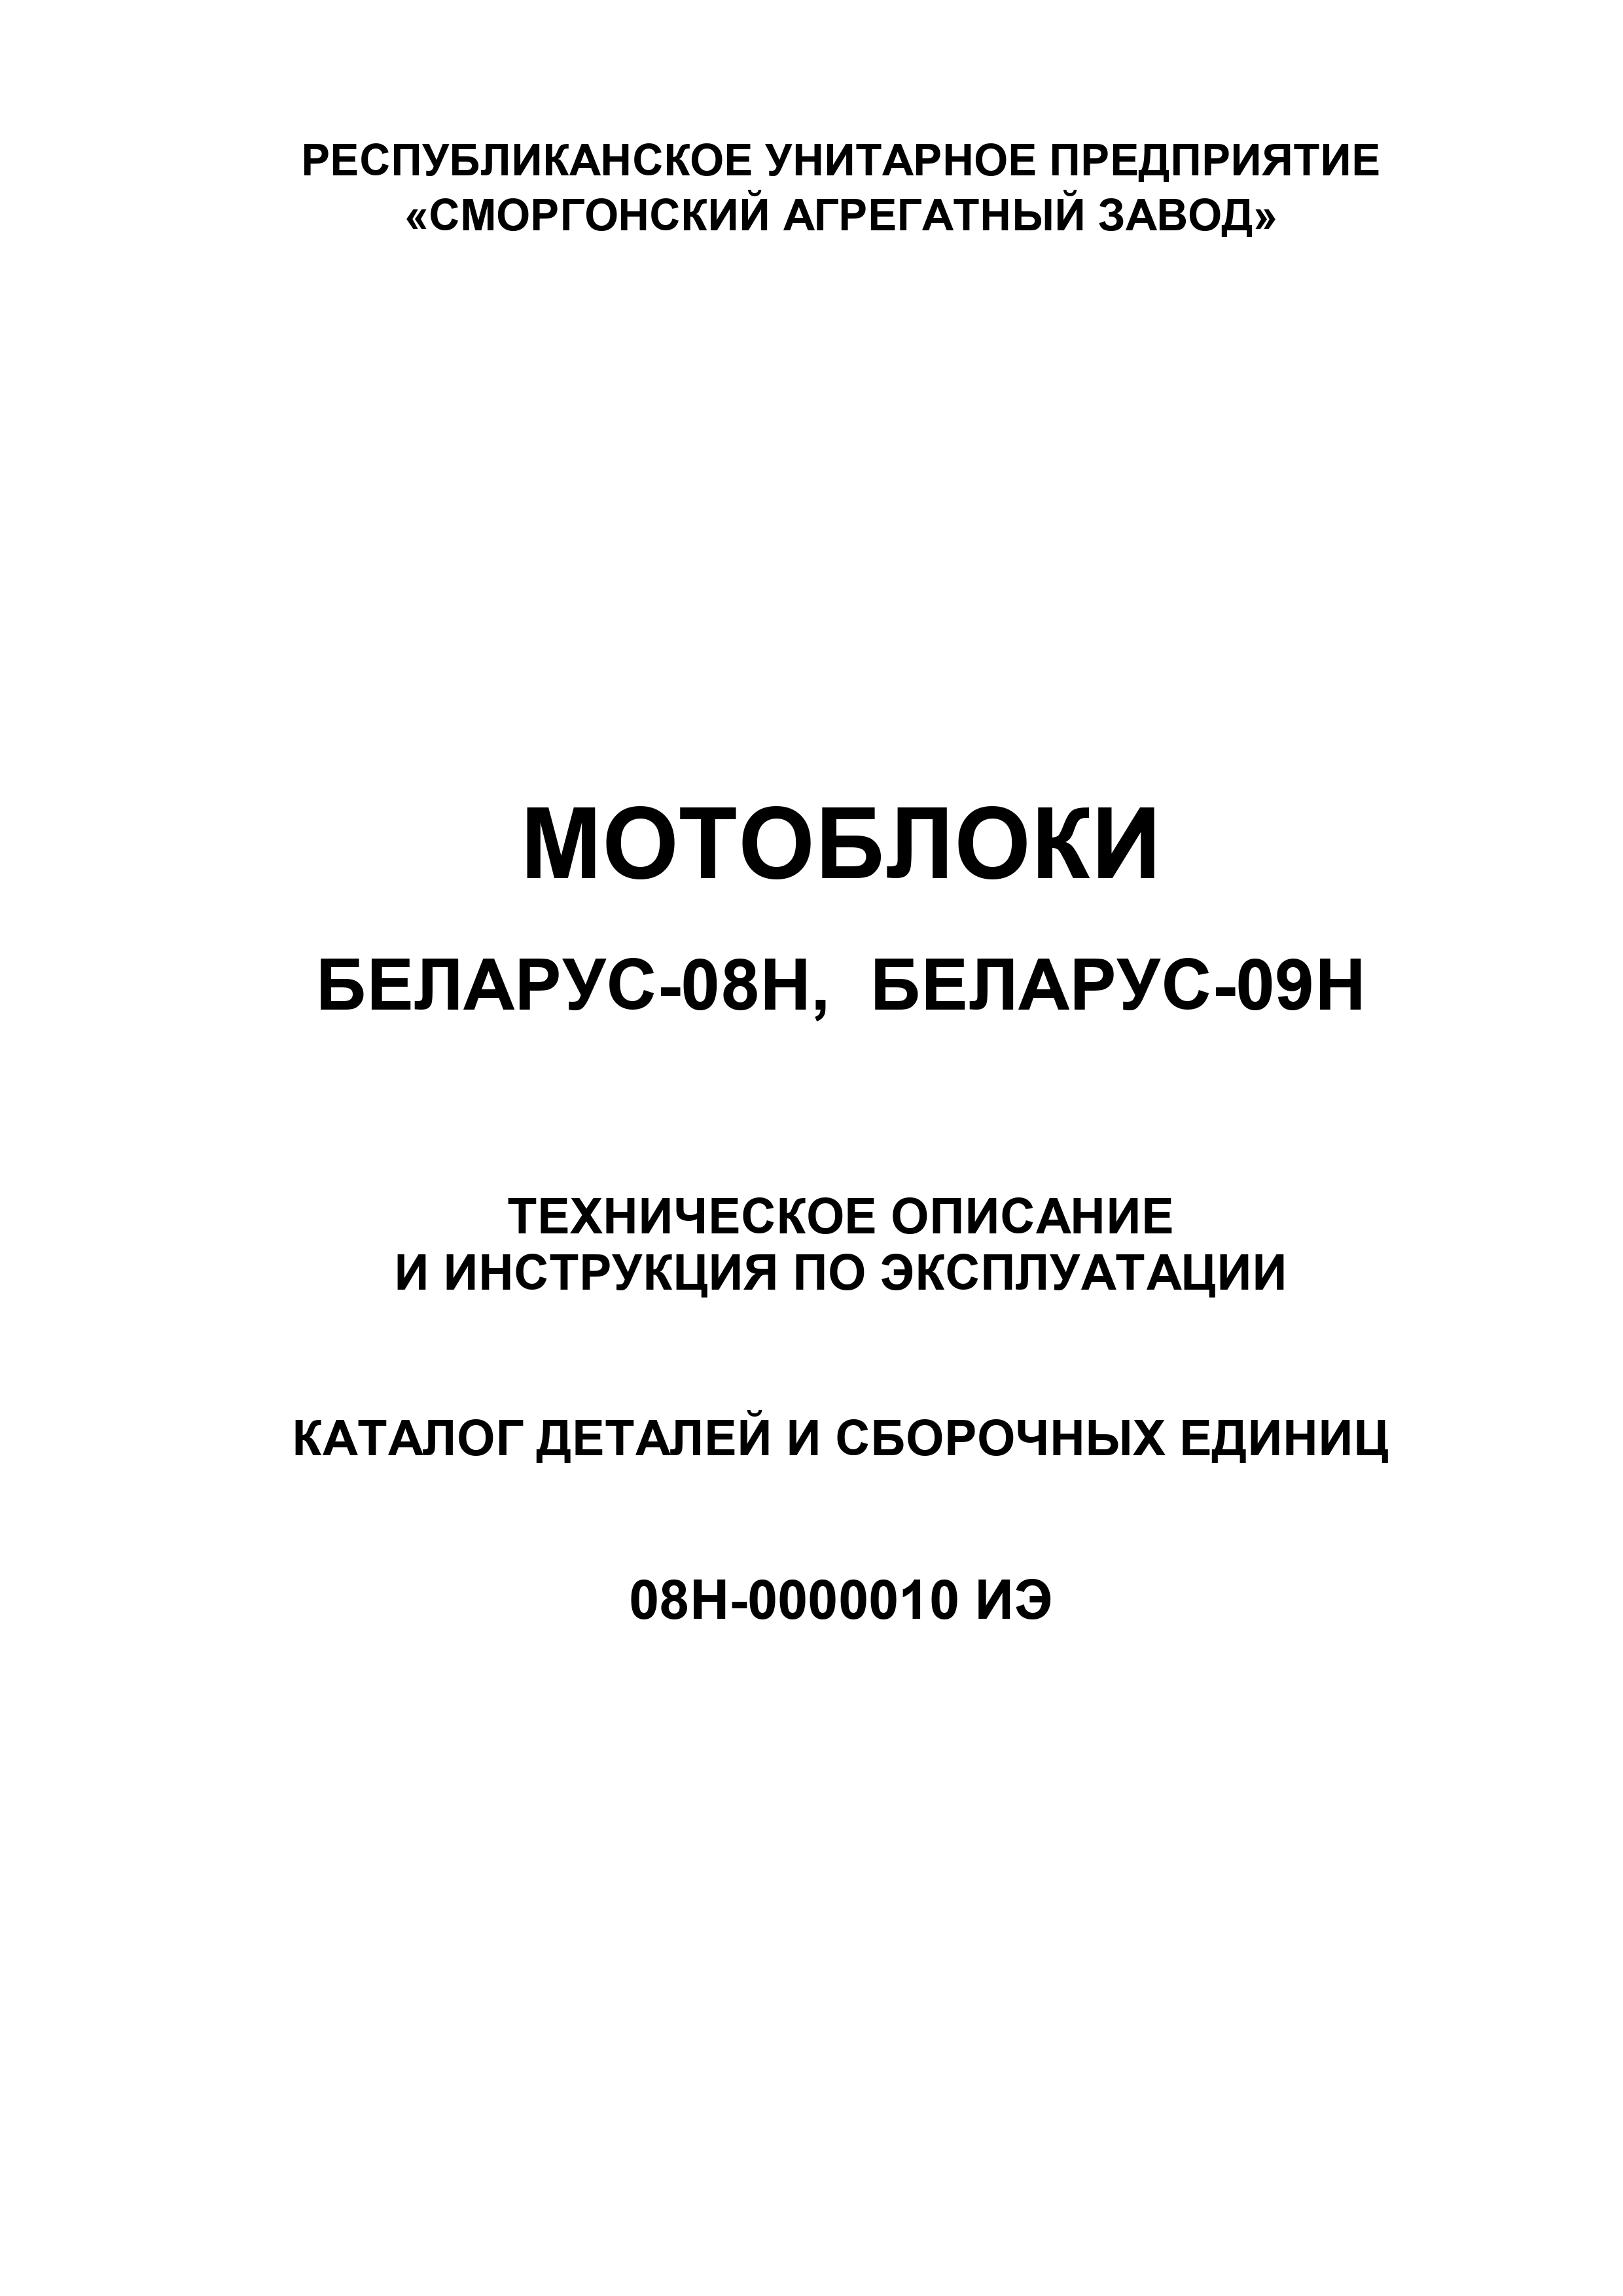 belarus_09h_manual i catalog (1)_page-0001